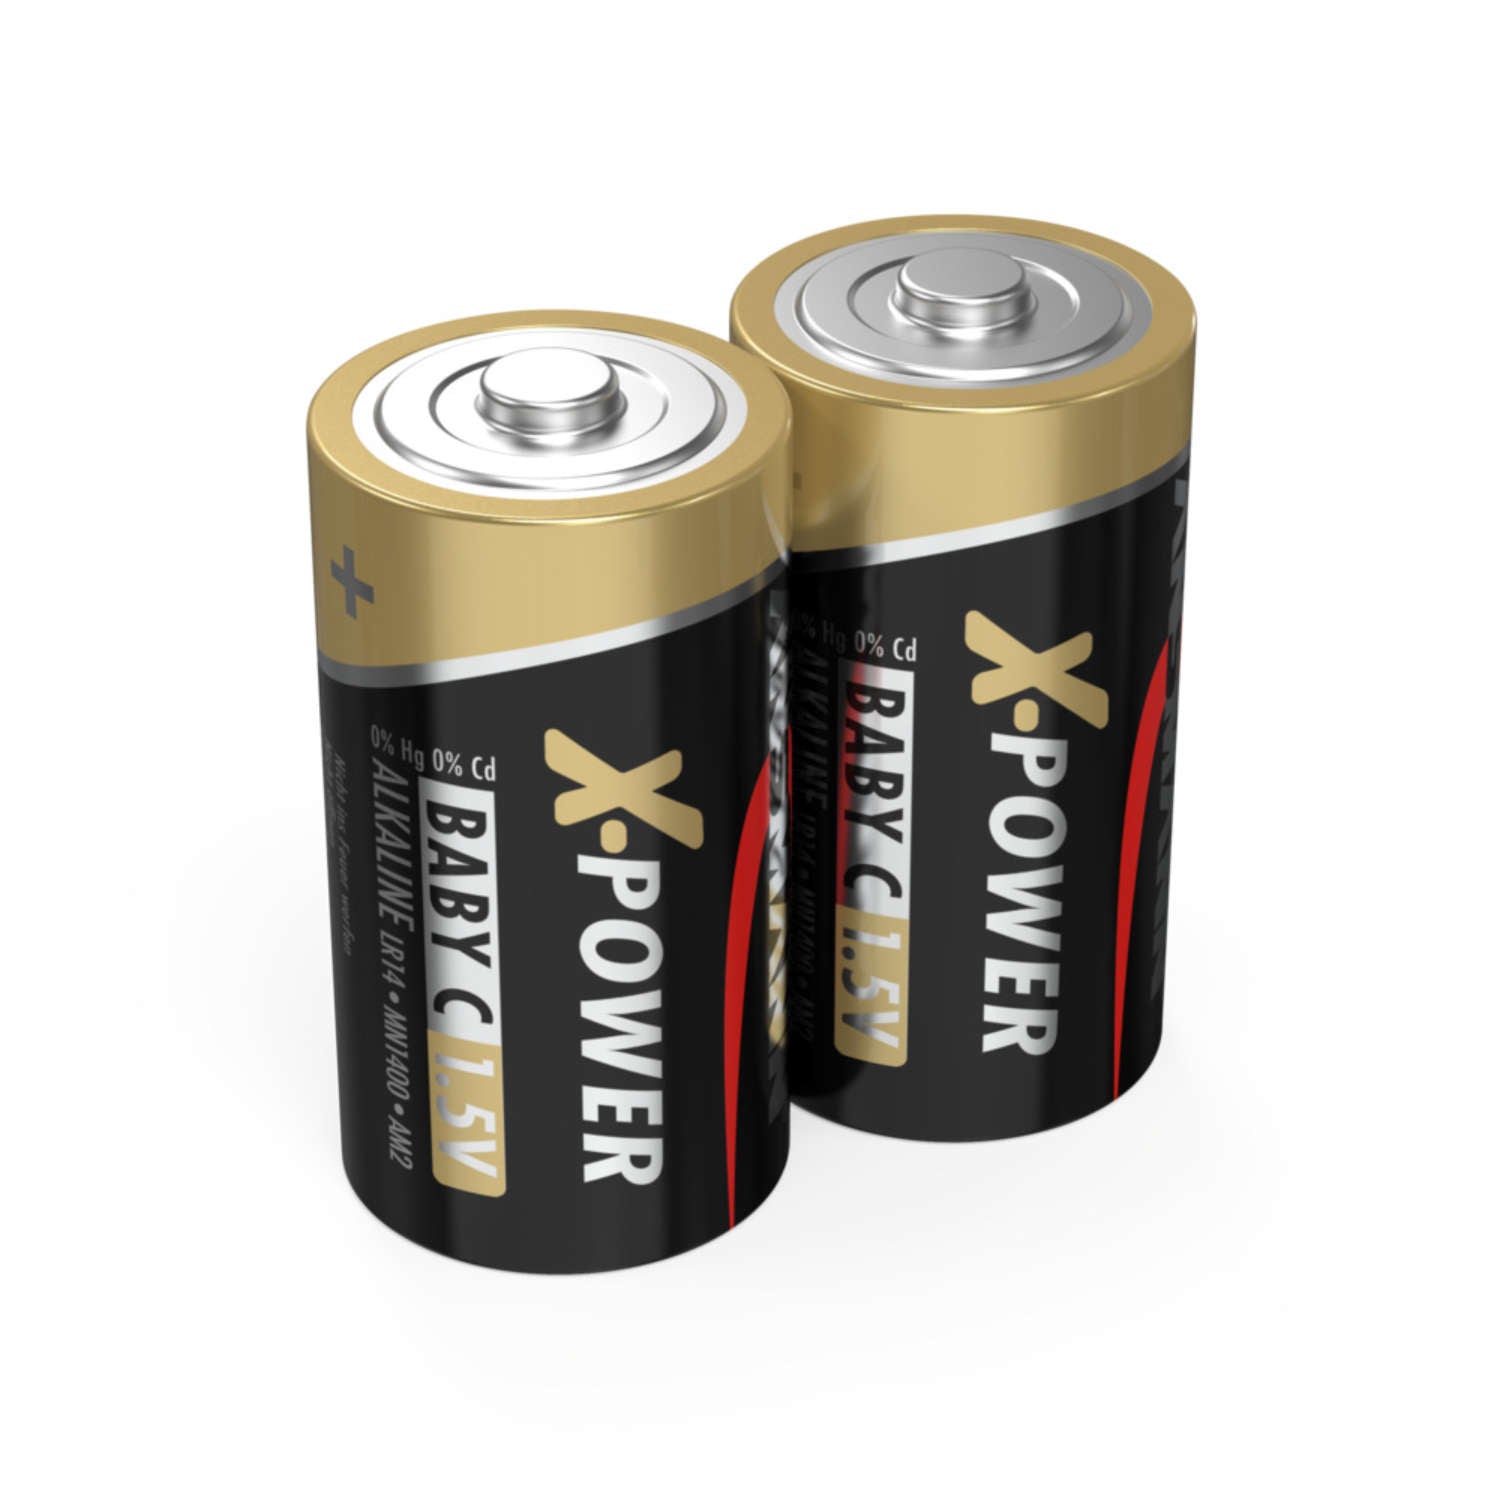 X-Power Alkaline Batteries